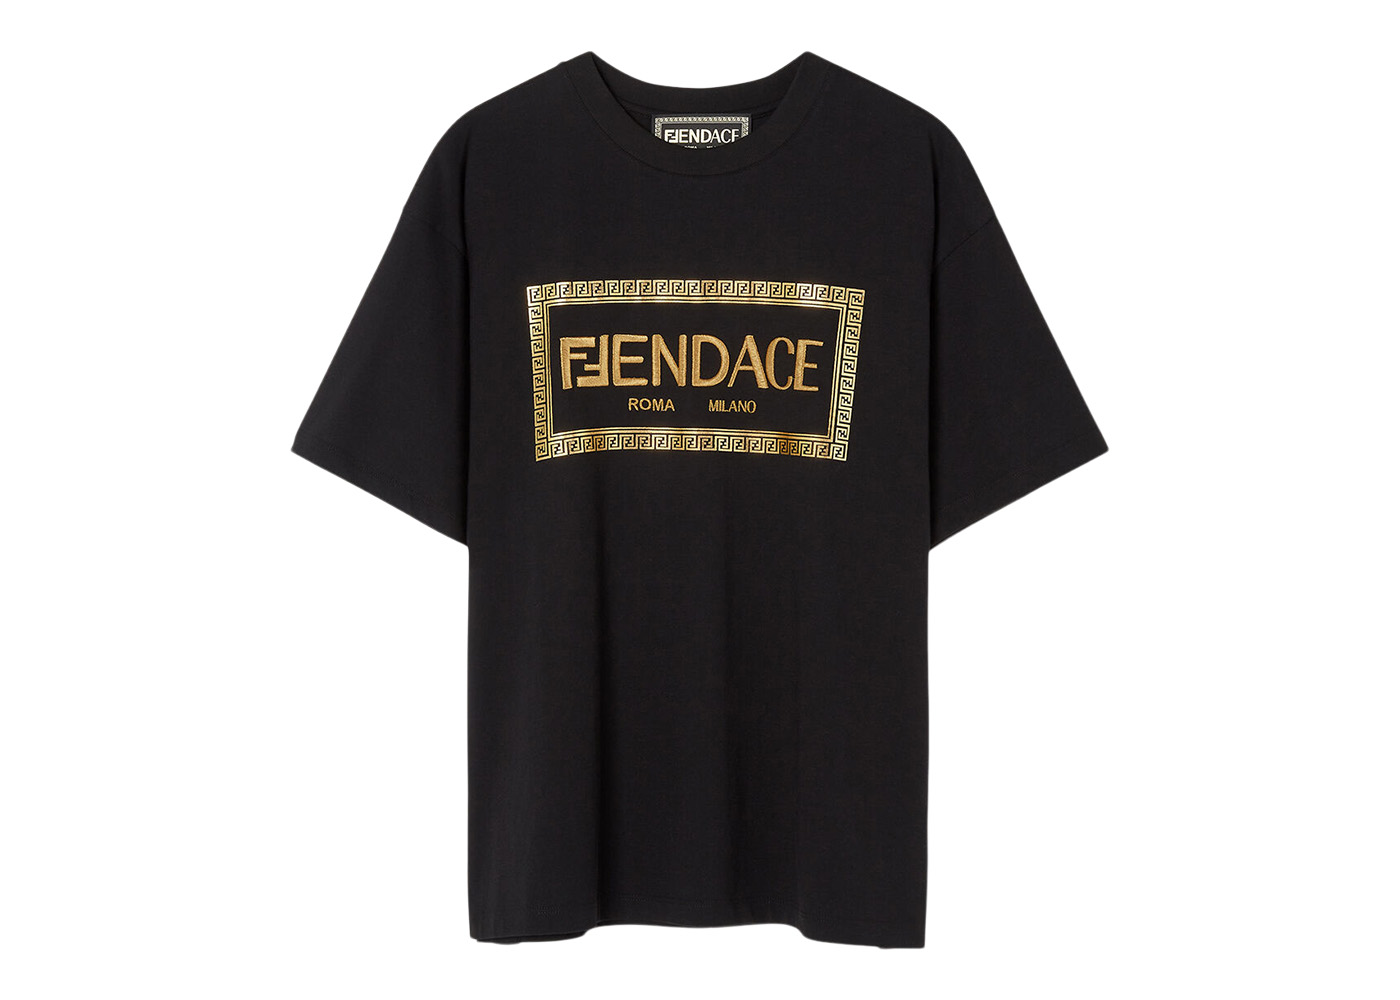 Fendi Fendace Logo Mens T-shirt Black/Gold - SS22 - US